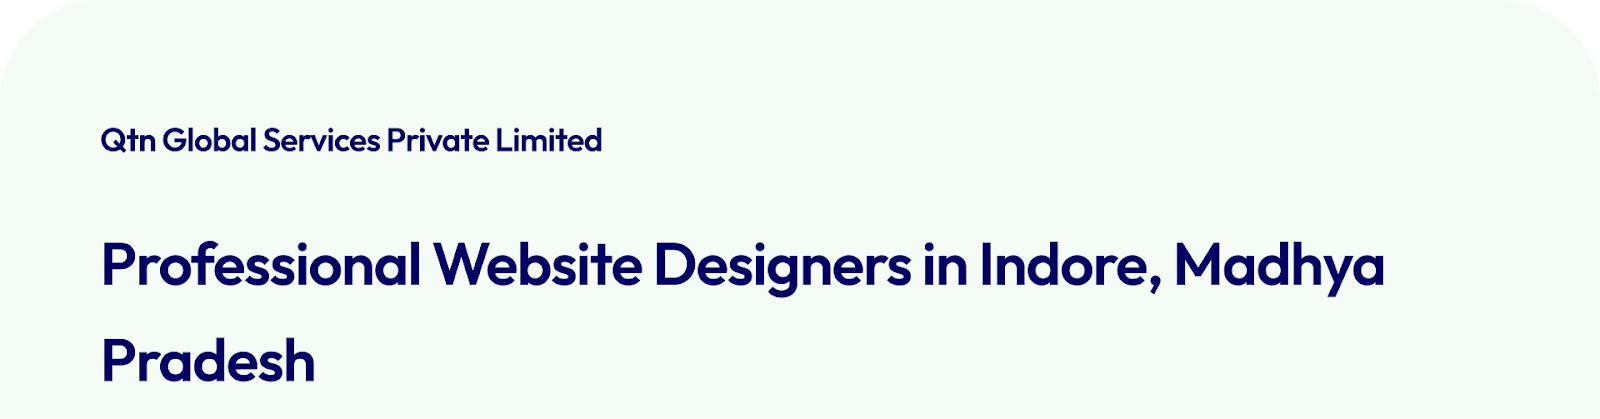 Professional Website Designers in Indore, Madhya Pradesh 